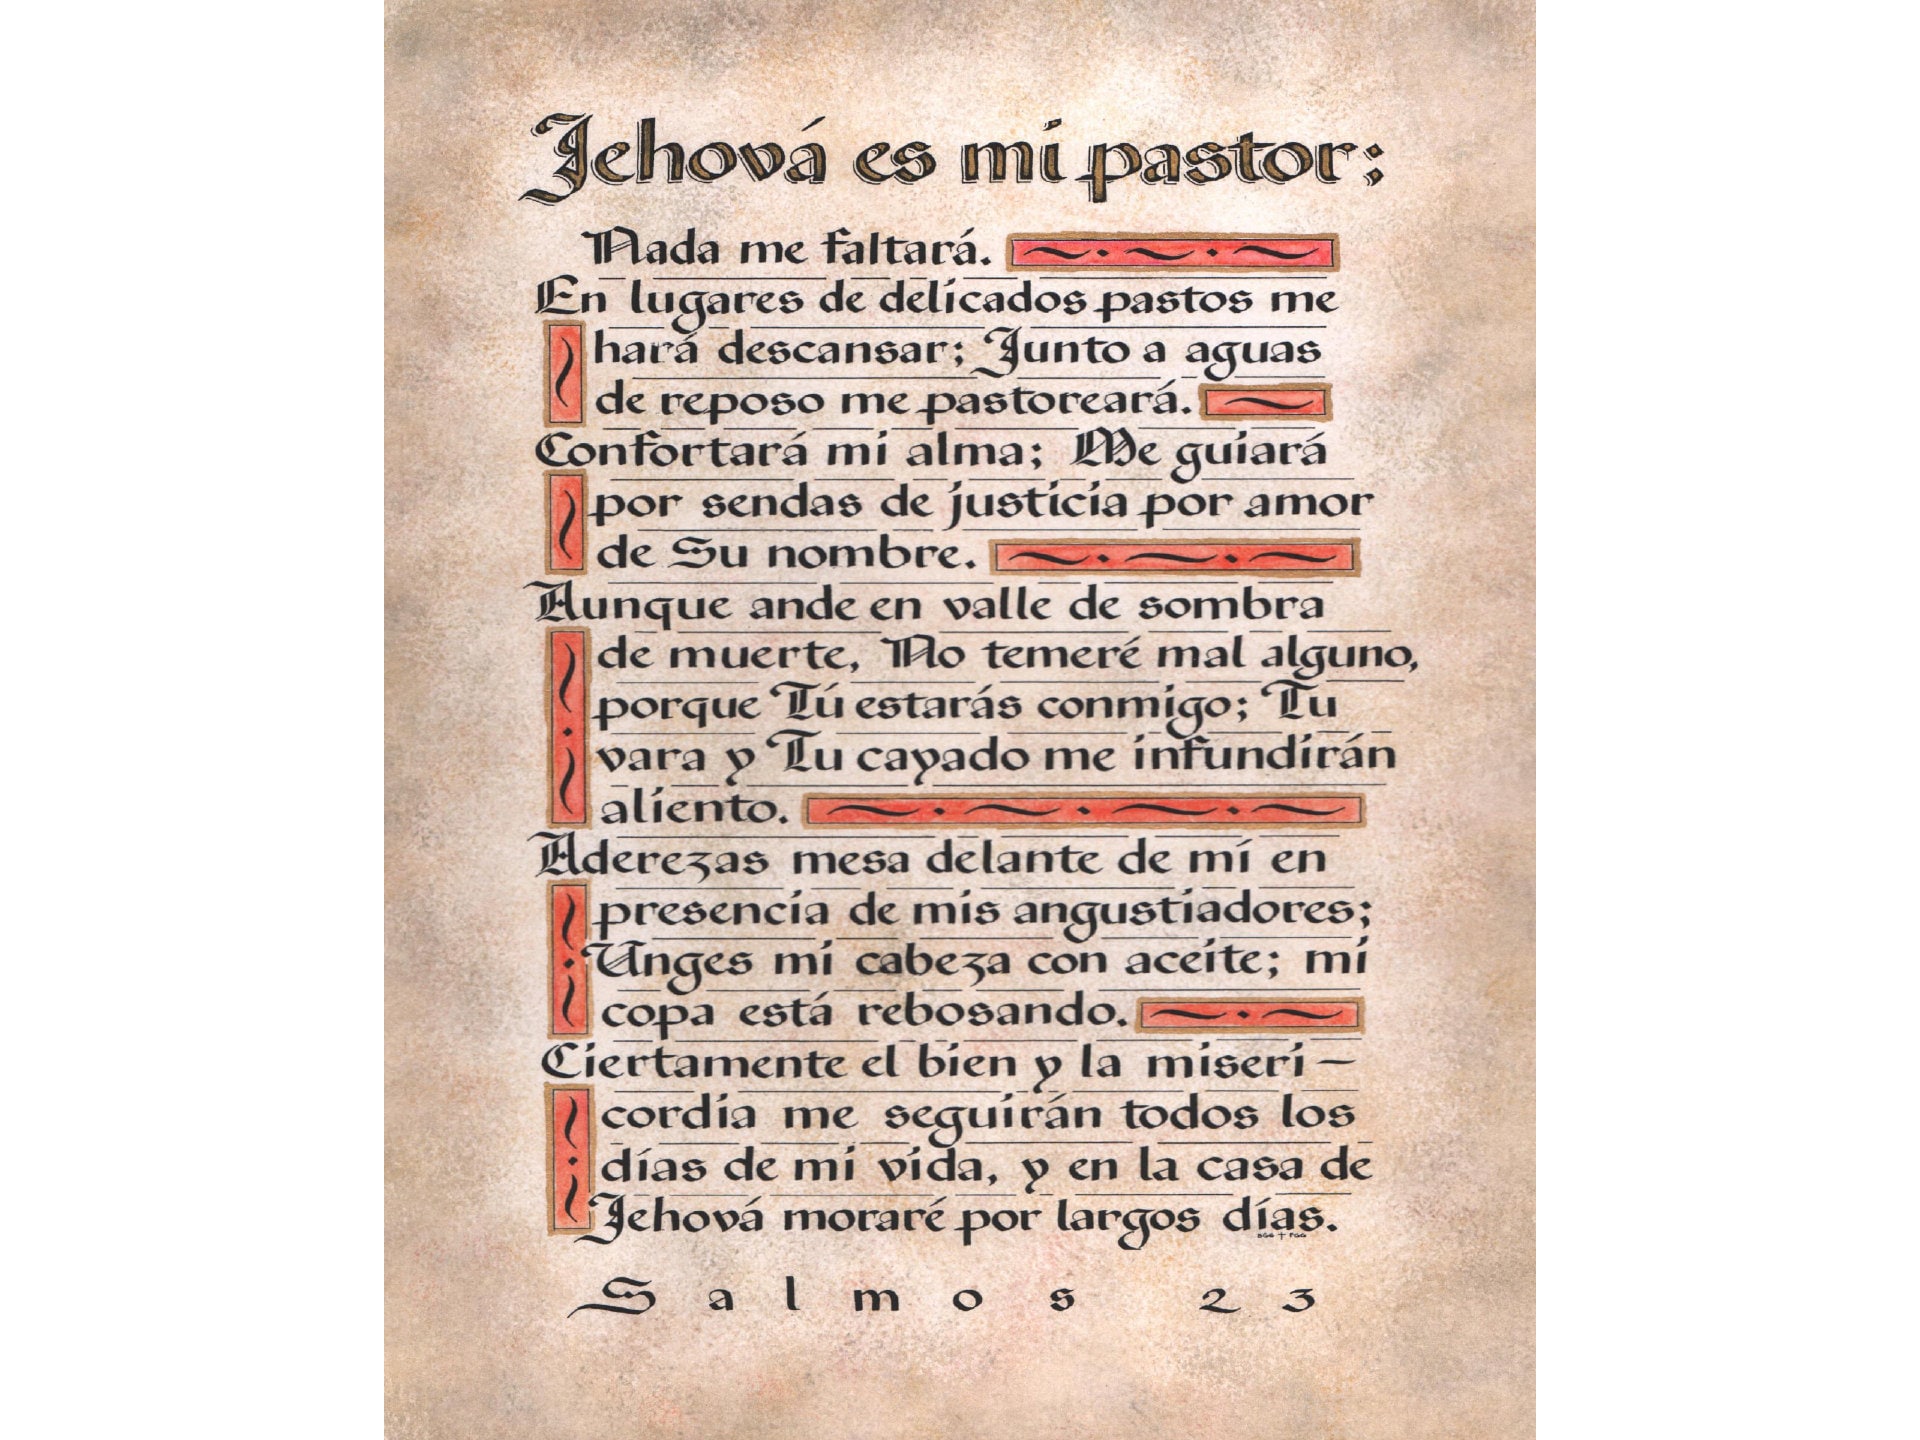 Salmo 23, Spanish Bible Verse | Greeting Card